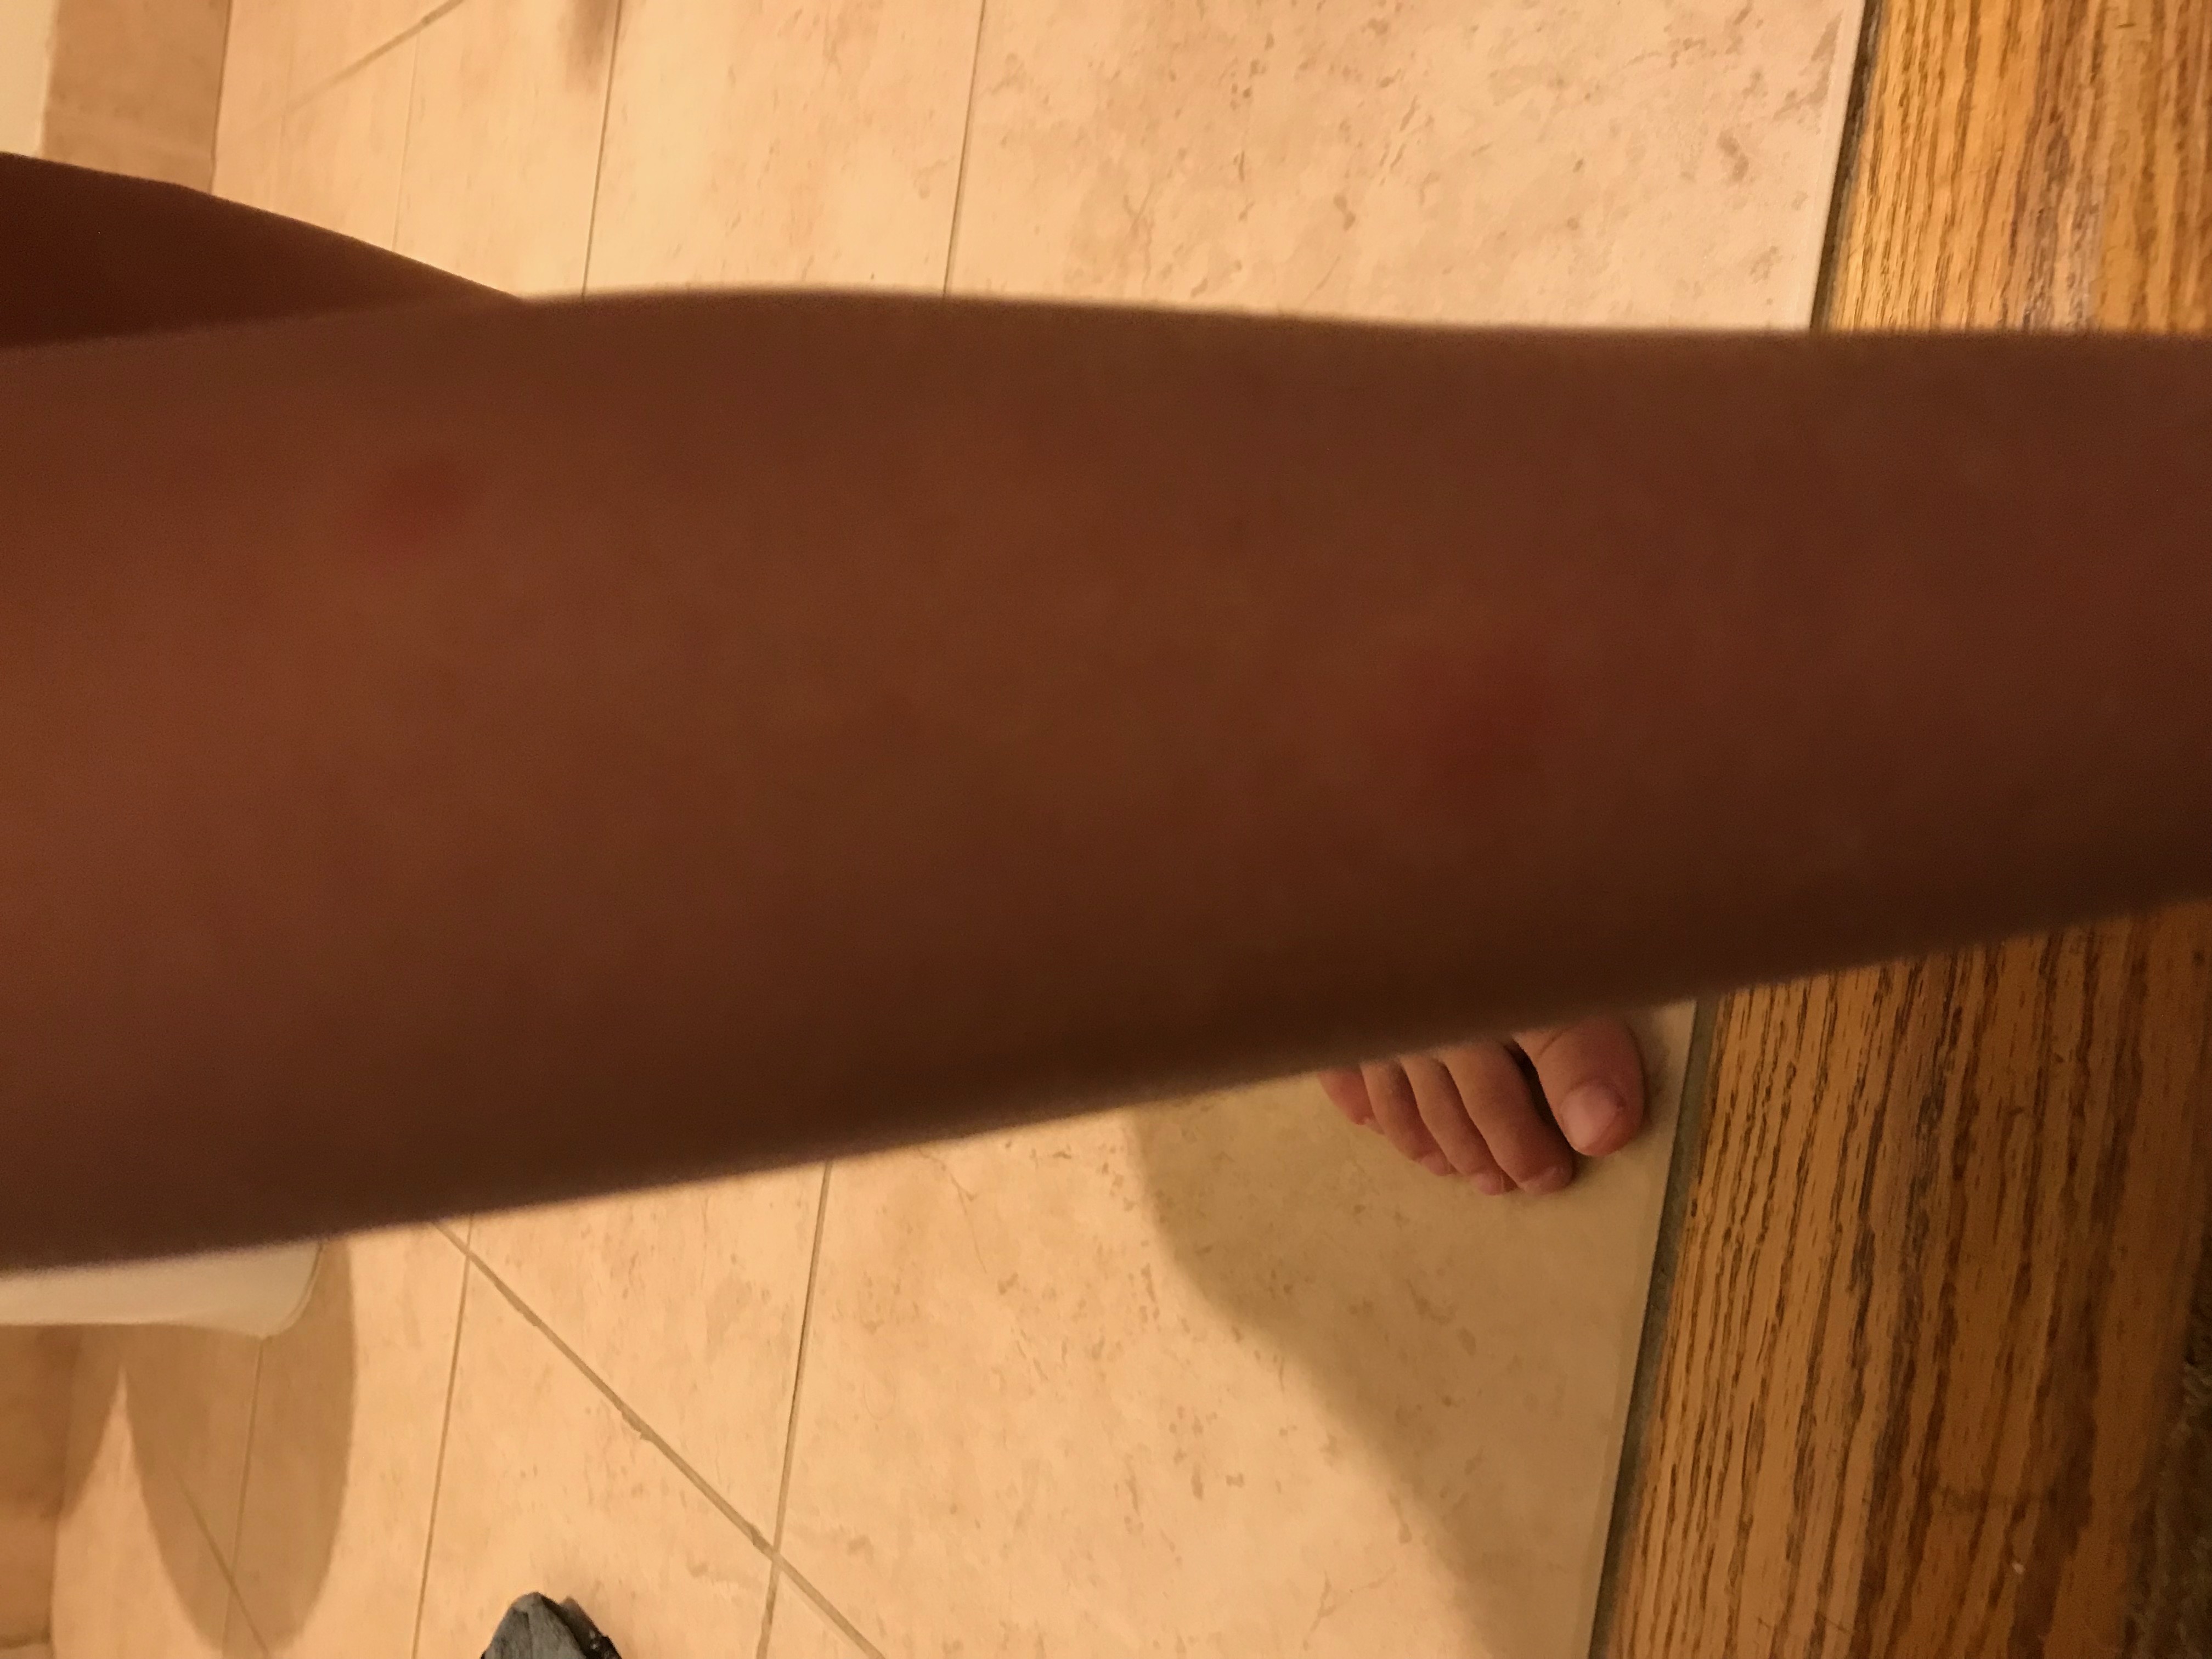 Bug bite on leg from BW hotel